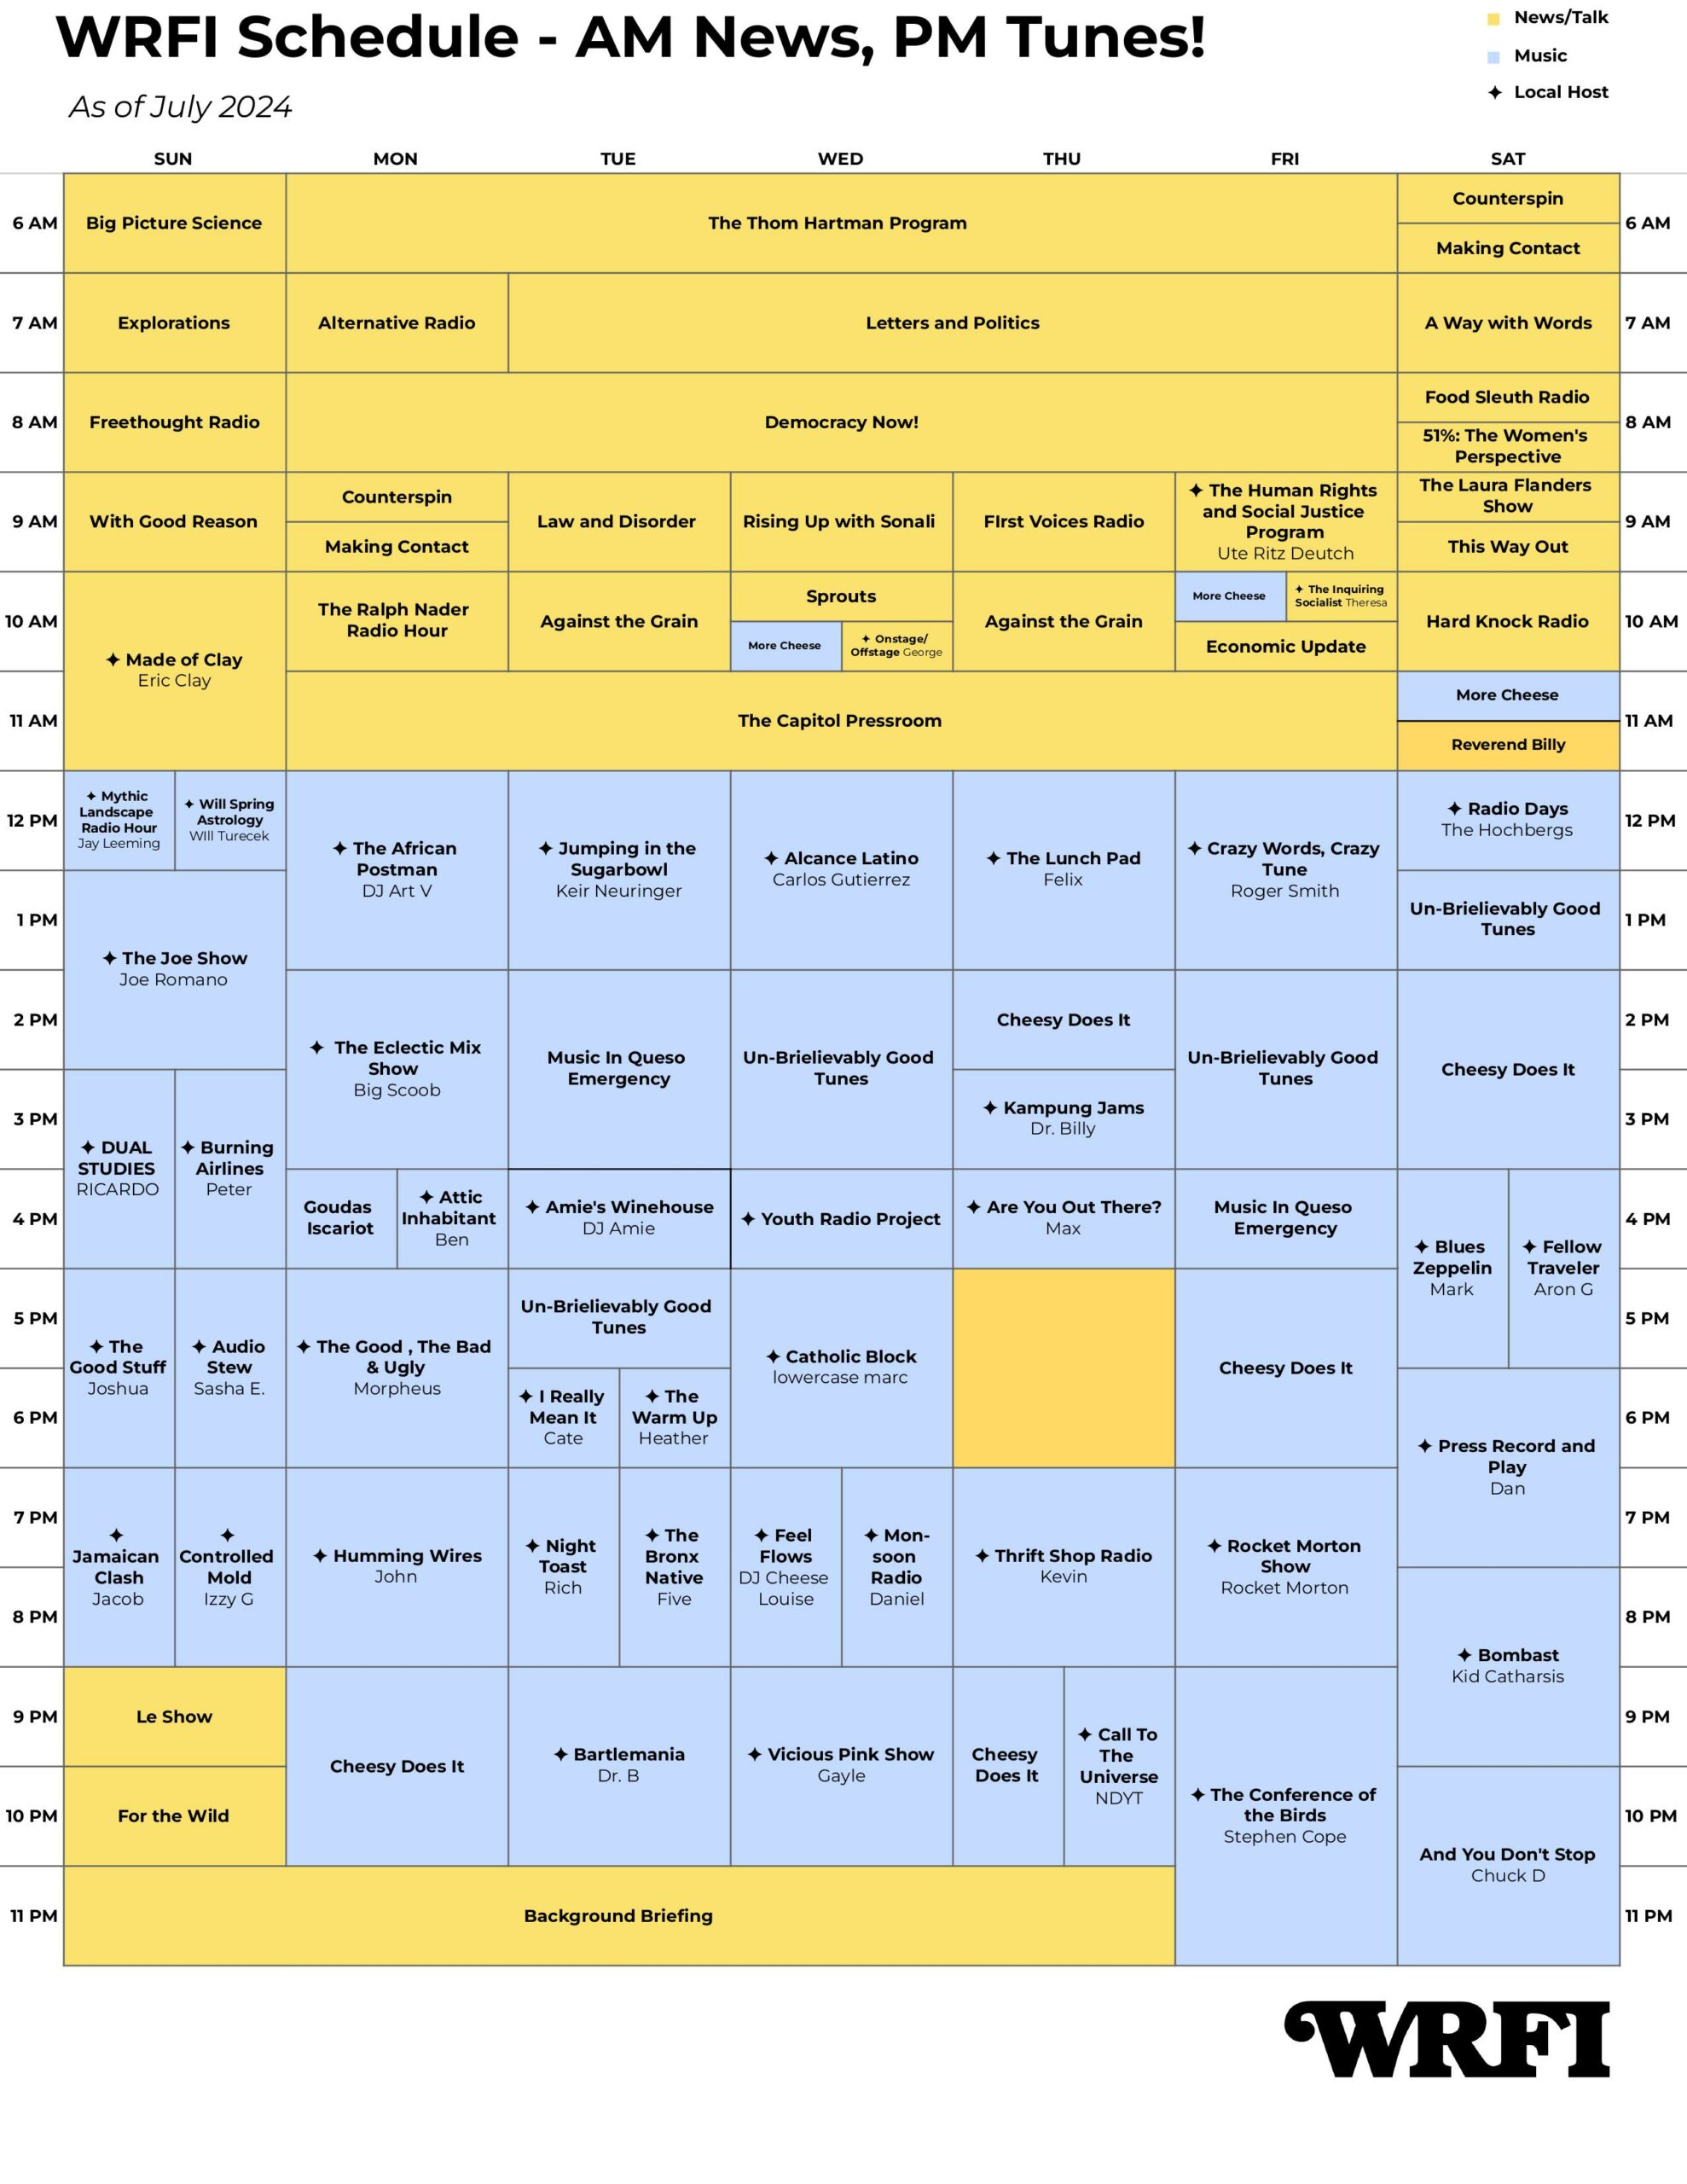 calendar grid of WRFI program schedule; talk programs in yellow, music programs in blue.